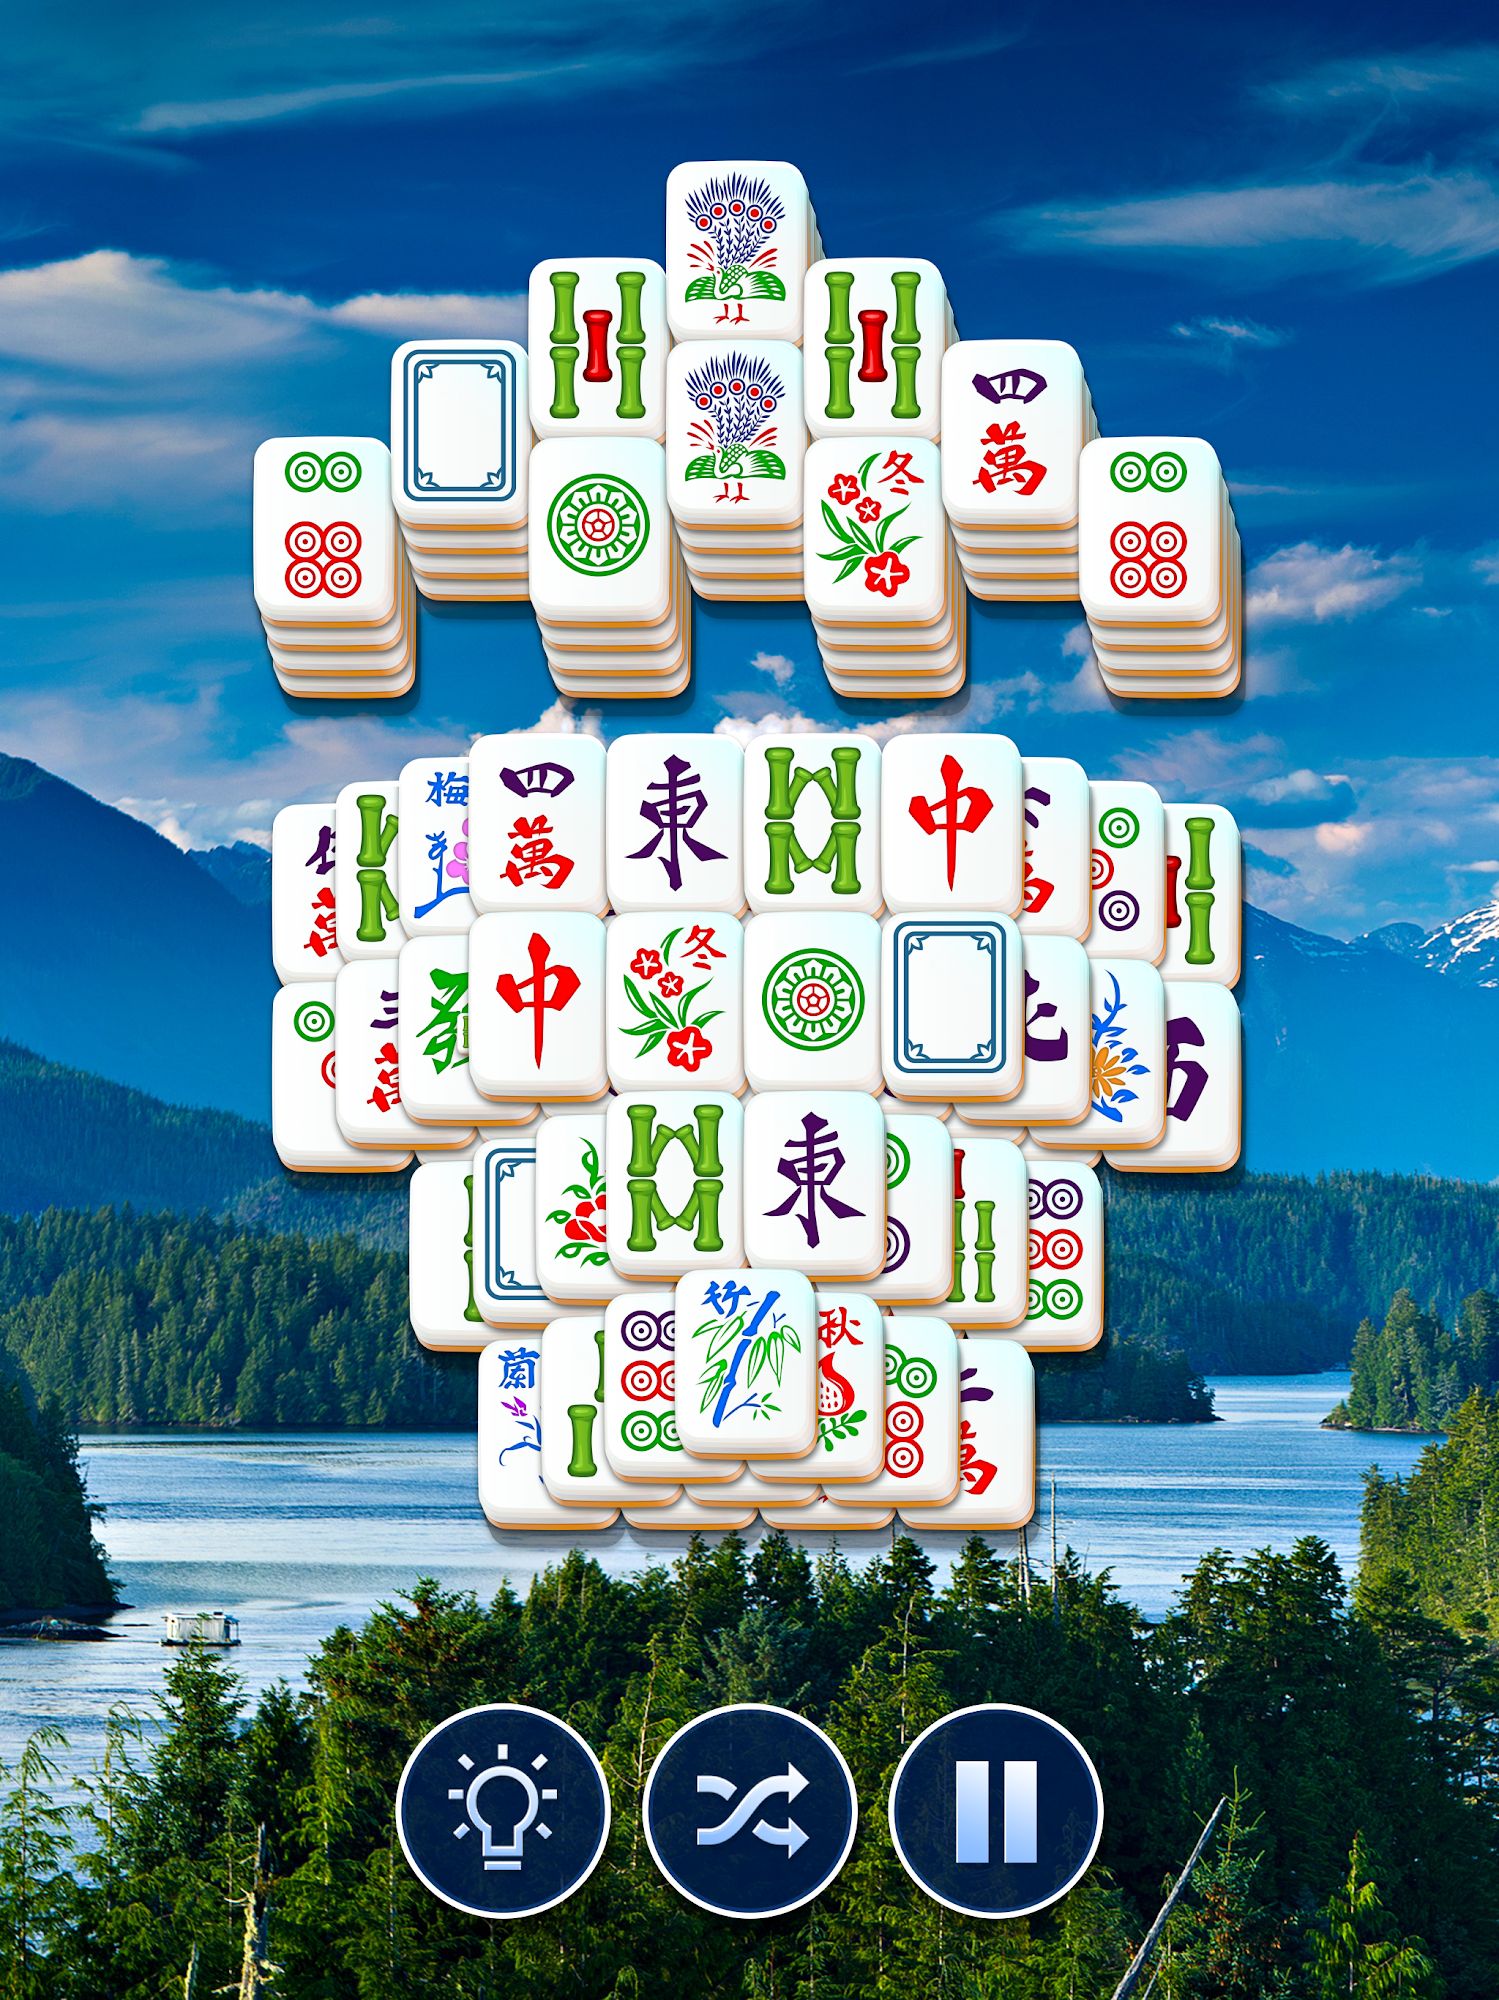 Download do APK de Mahjong Club para Android